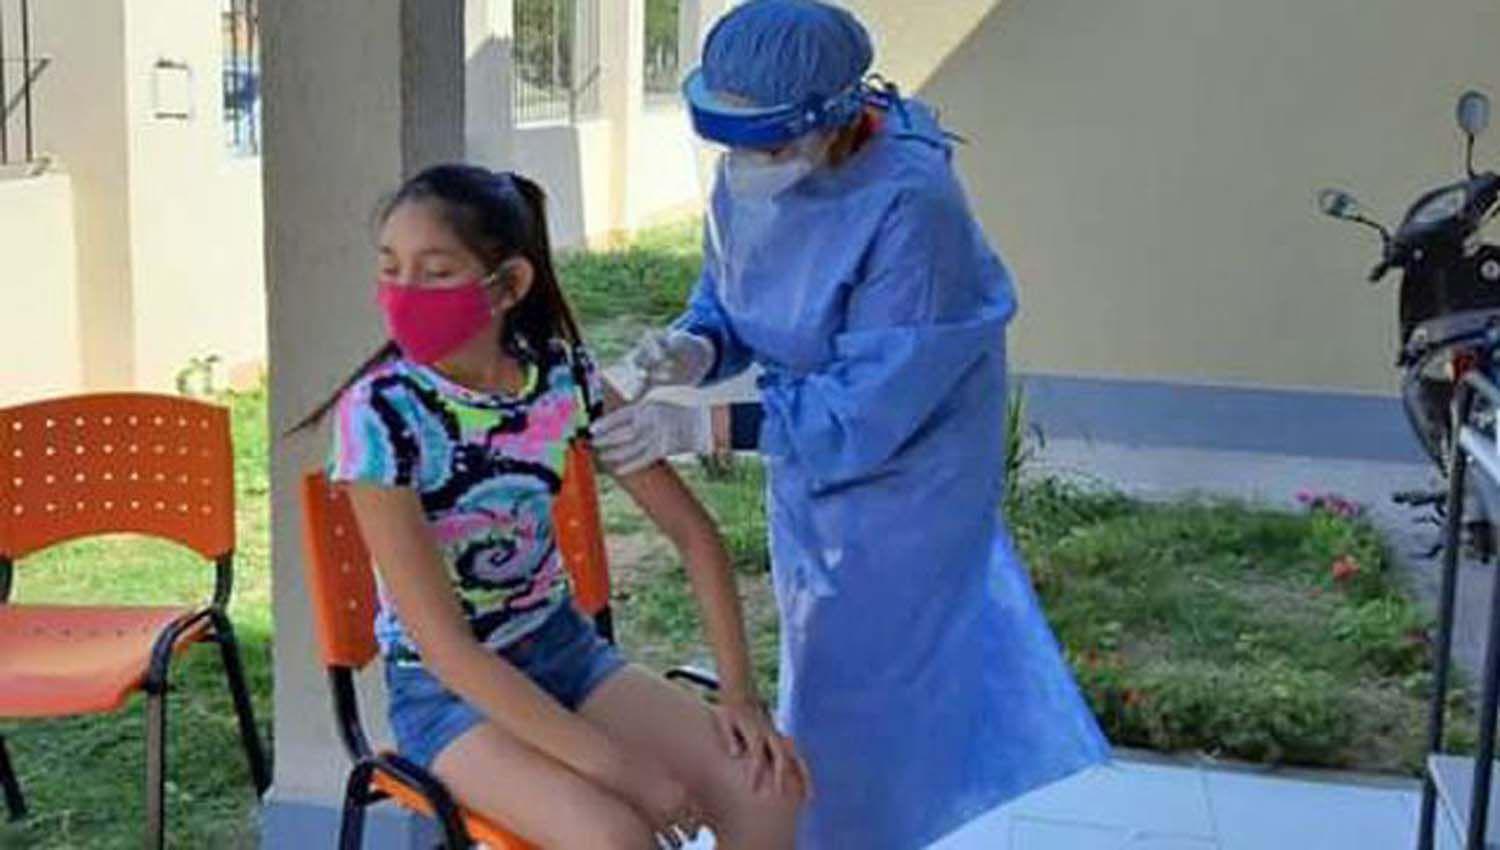 Mantildeana continuaraacuten las jornadas de vacunacioacuten masiva contra Covid-19